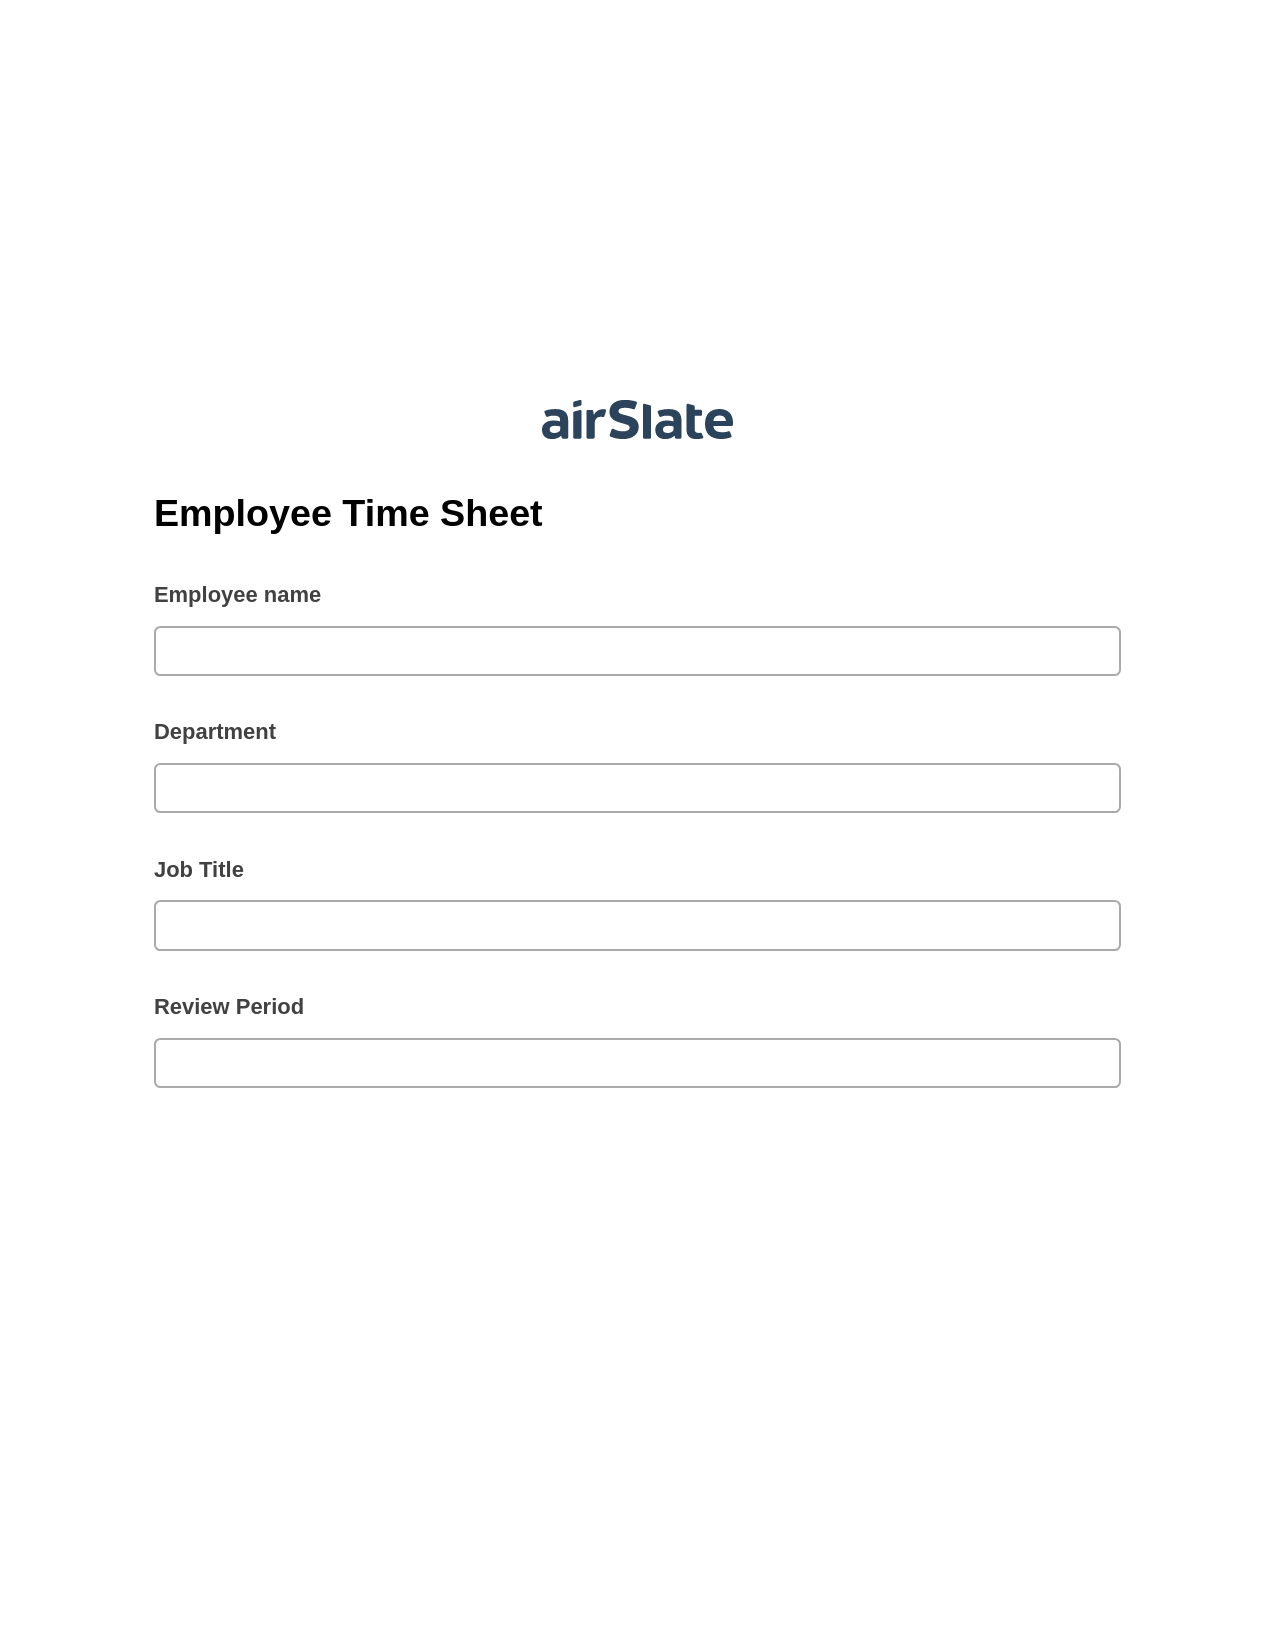 Employee Time Sheet Pre-fill from Salesforce Records Bot, Create Salesforce Records Bot, Archive to SharePoint Folder Bot